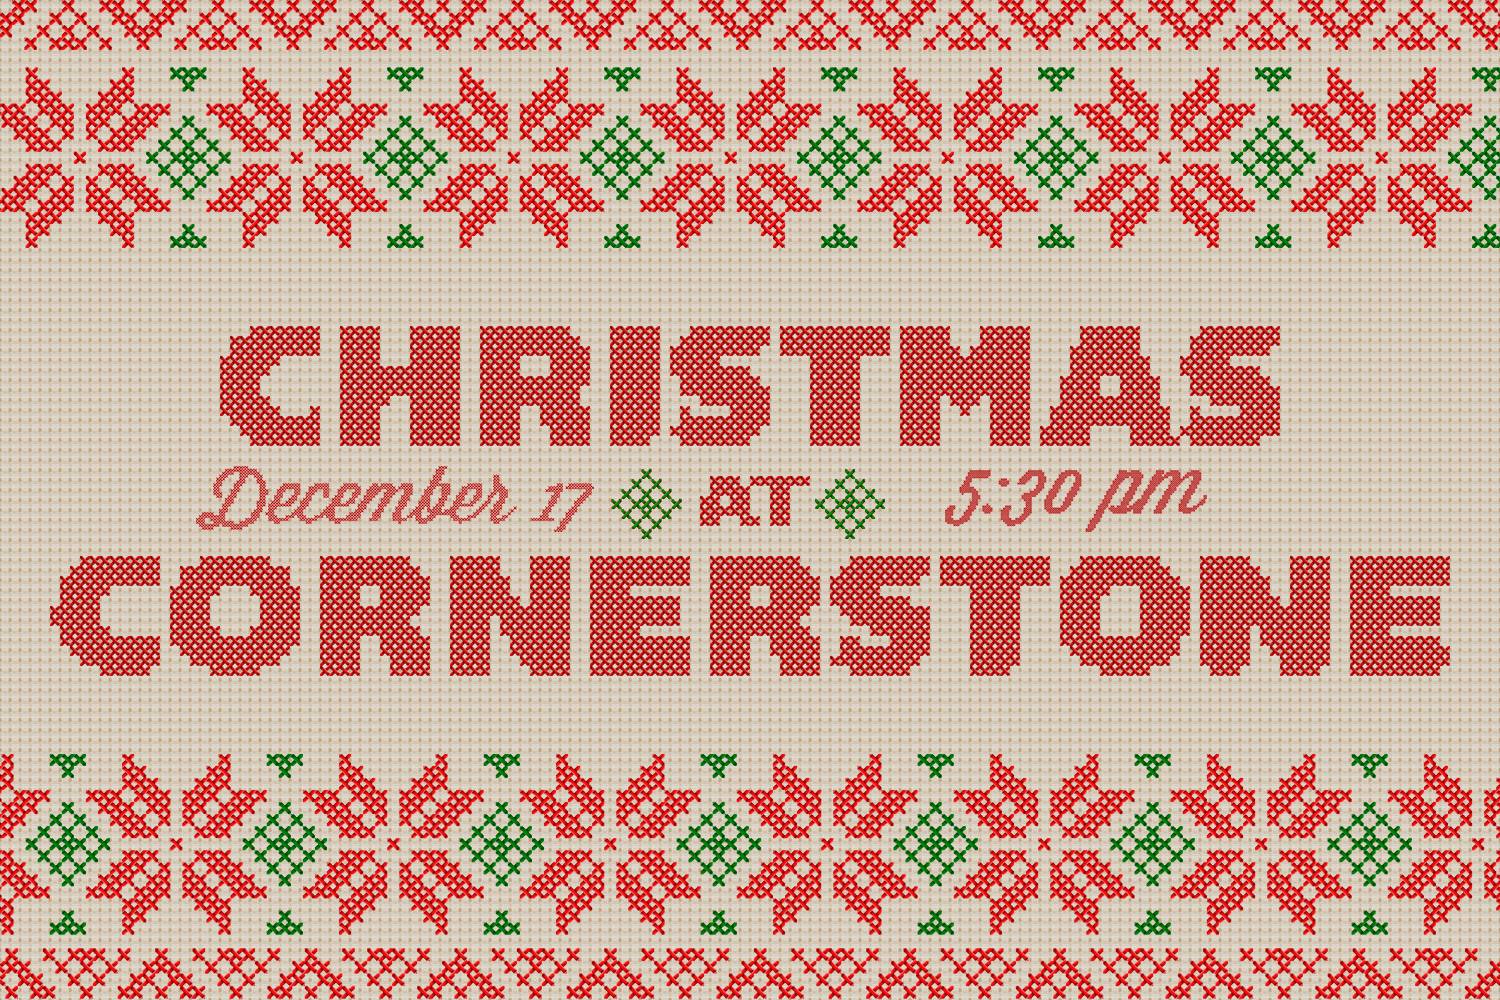 Christmas at Cornerstone Community Church